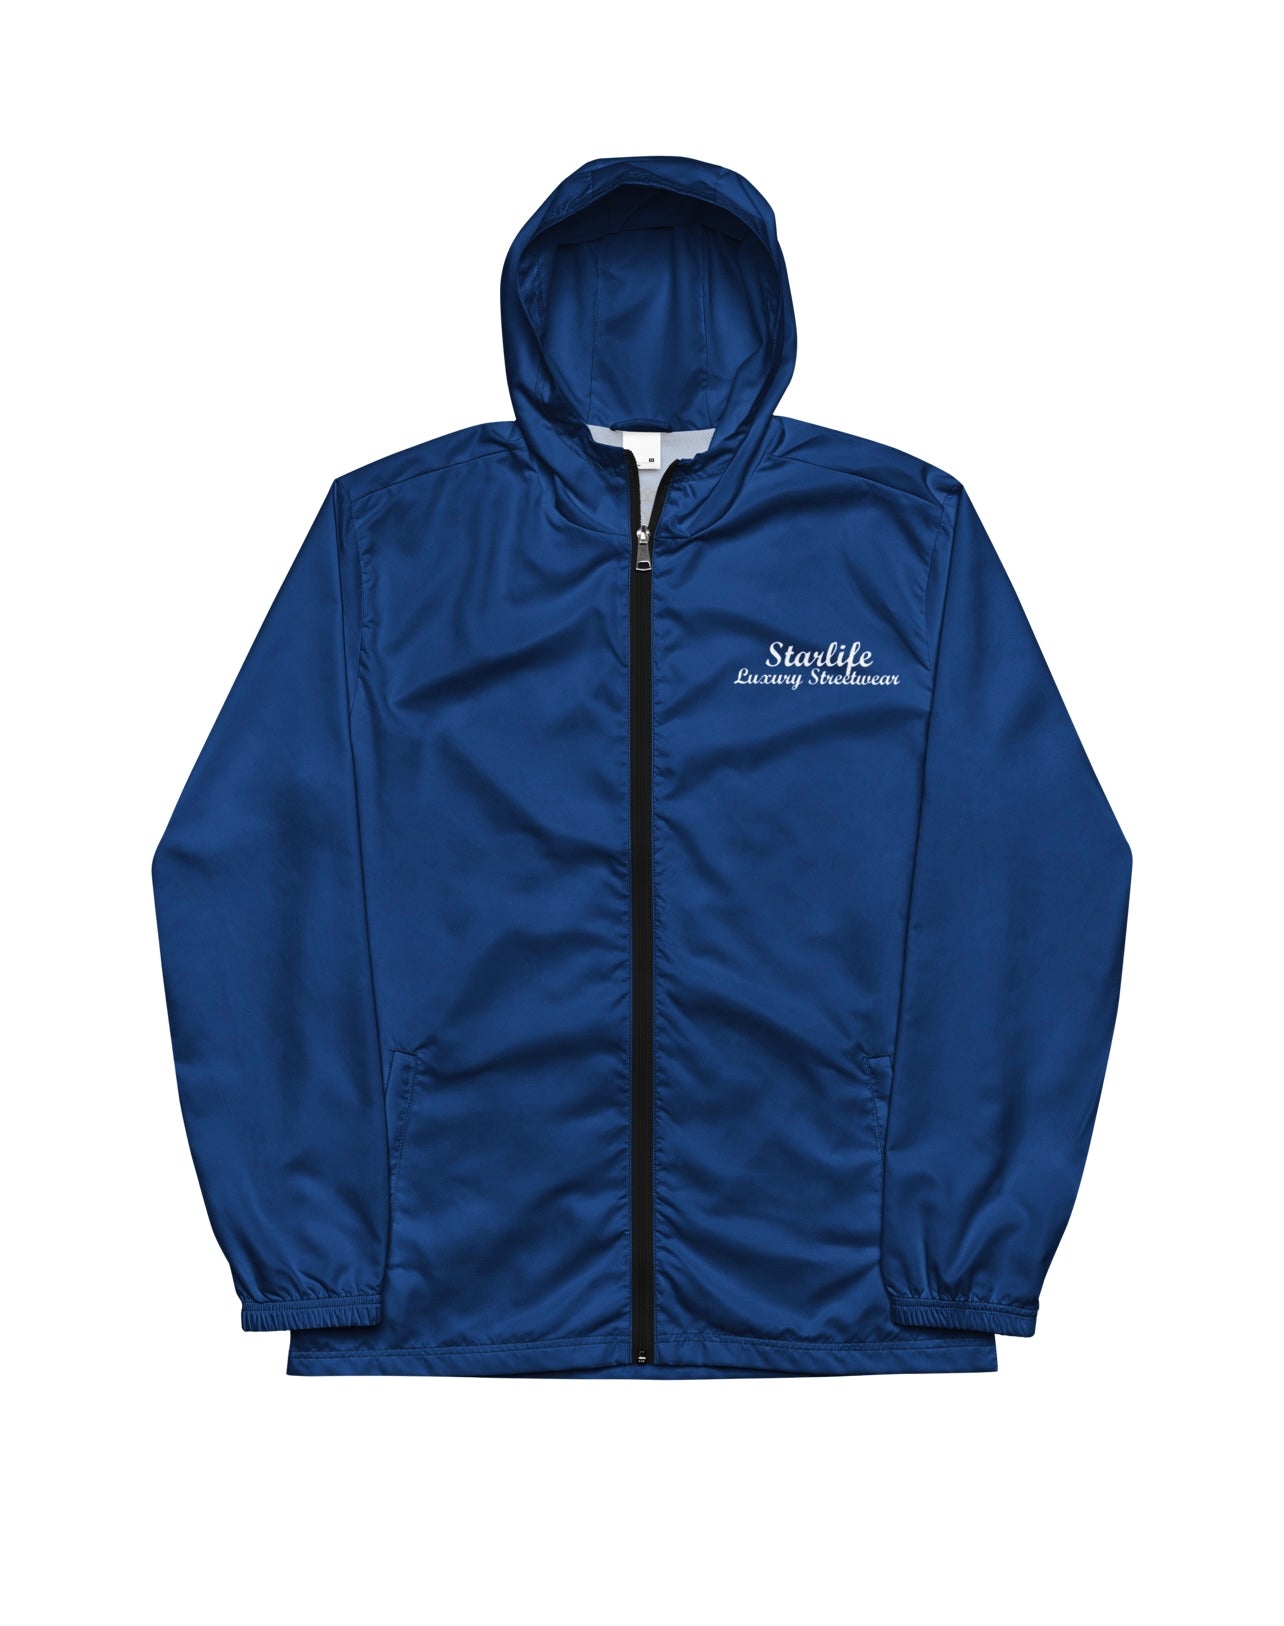 Starlife Navy Blue Track Jacket